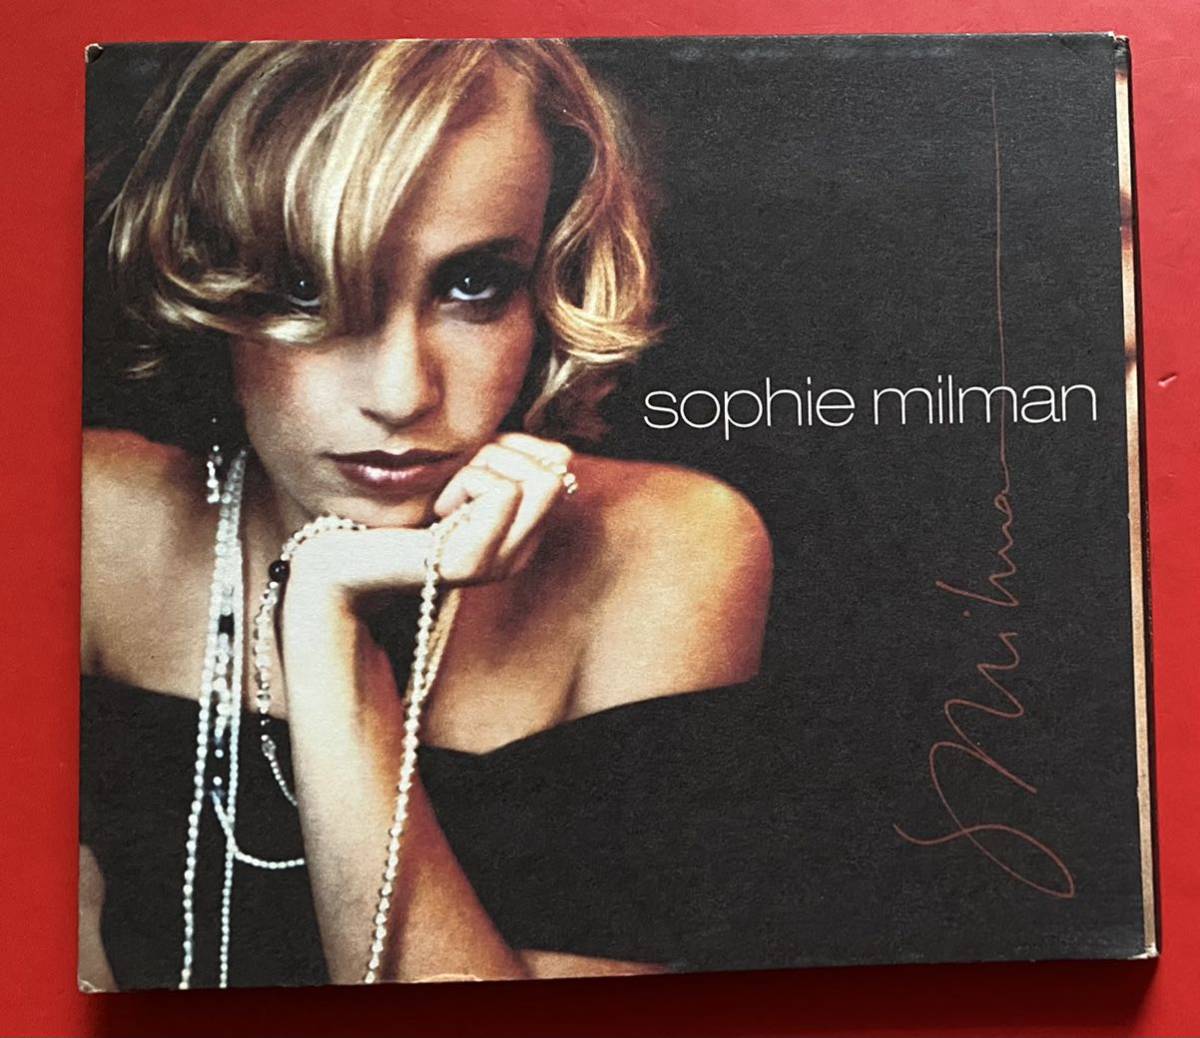 【CD】「Sophie Milman」ソフィー・ミルマン 輸入盤 デジパック仕様 [11020165]_画像1